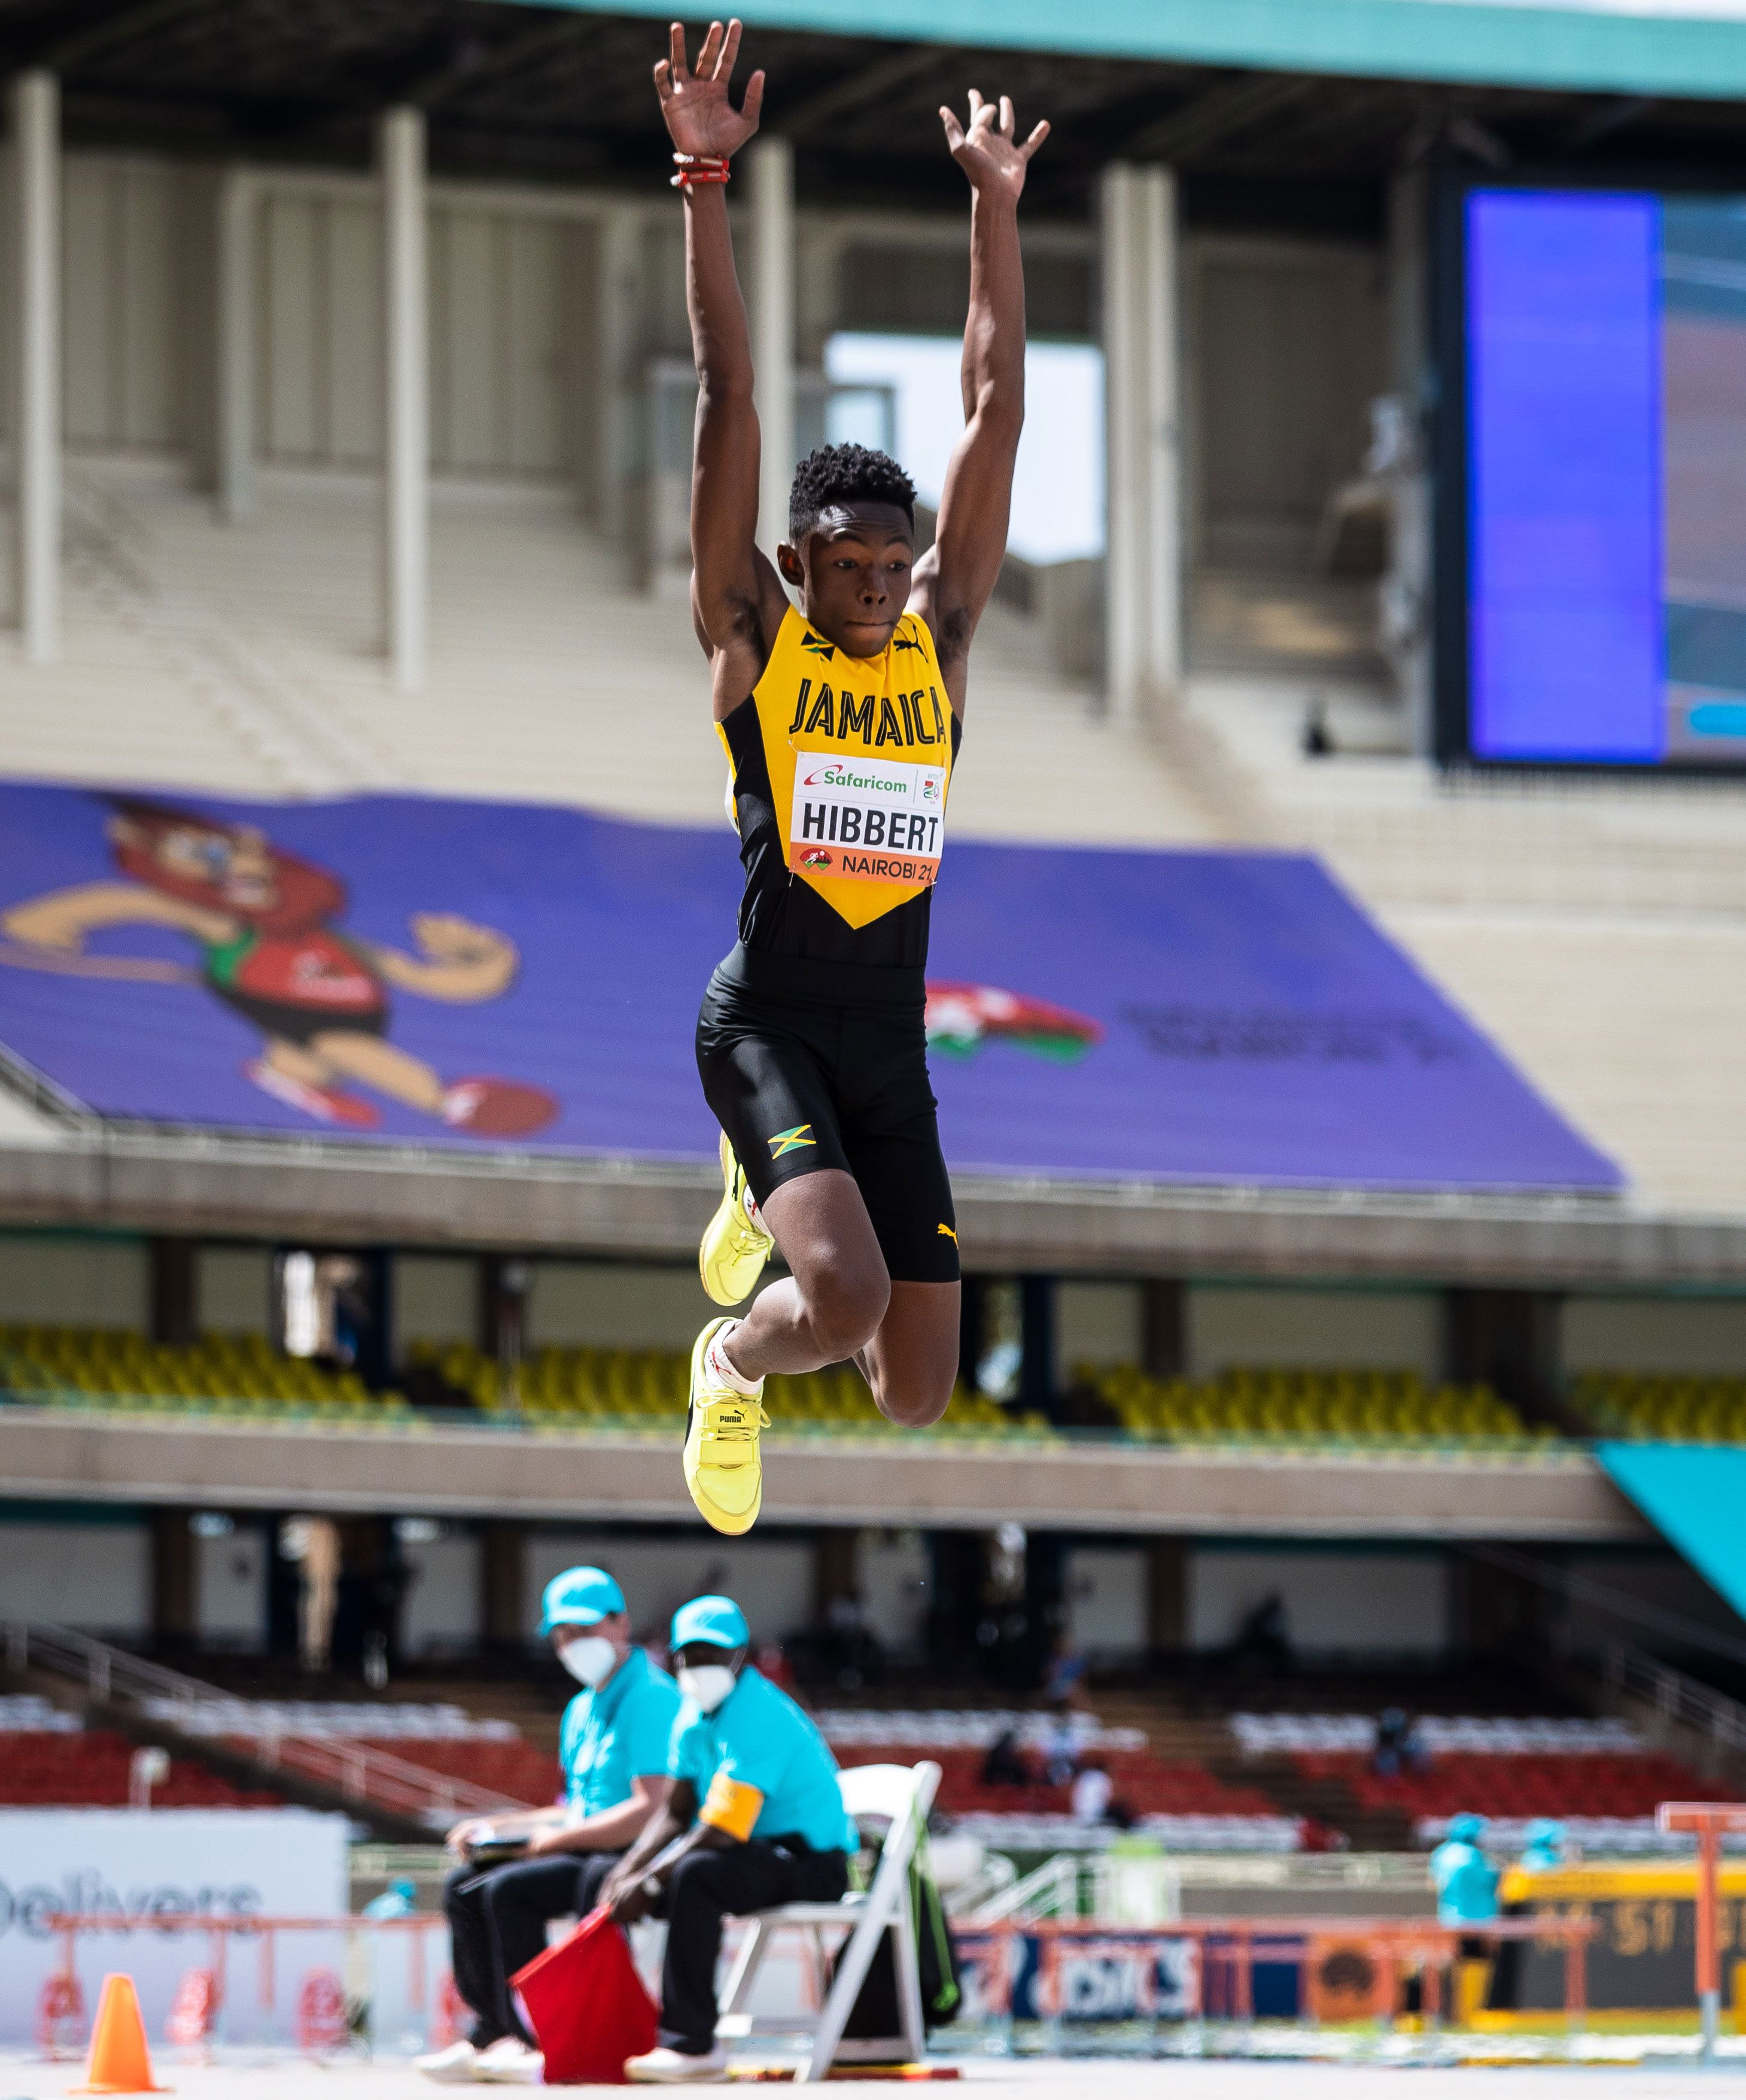 Jaydon Hibbert competes at the World Athletics U20 Championships Nairobi 21